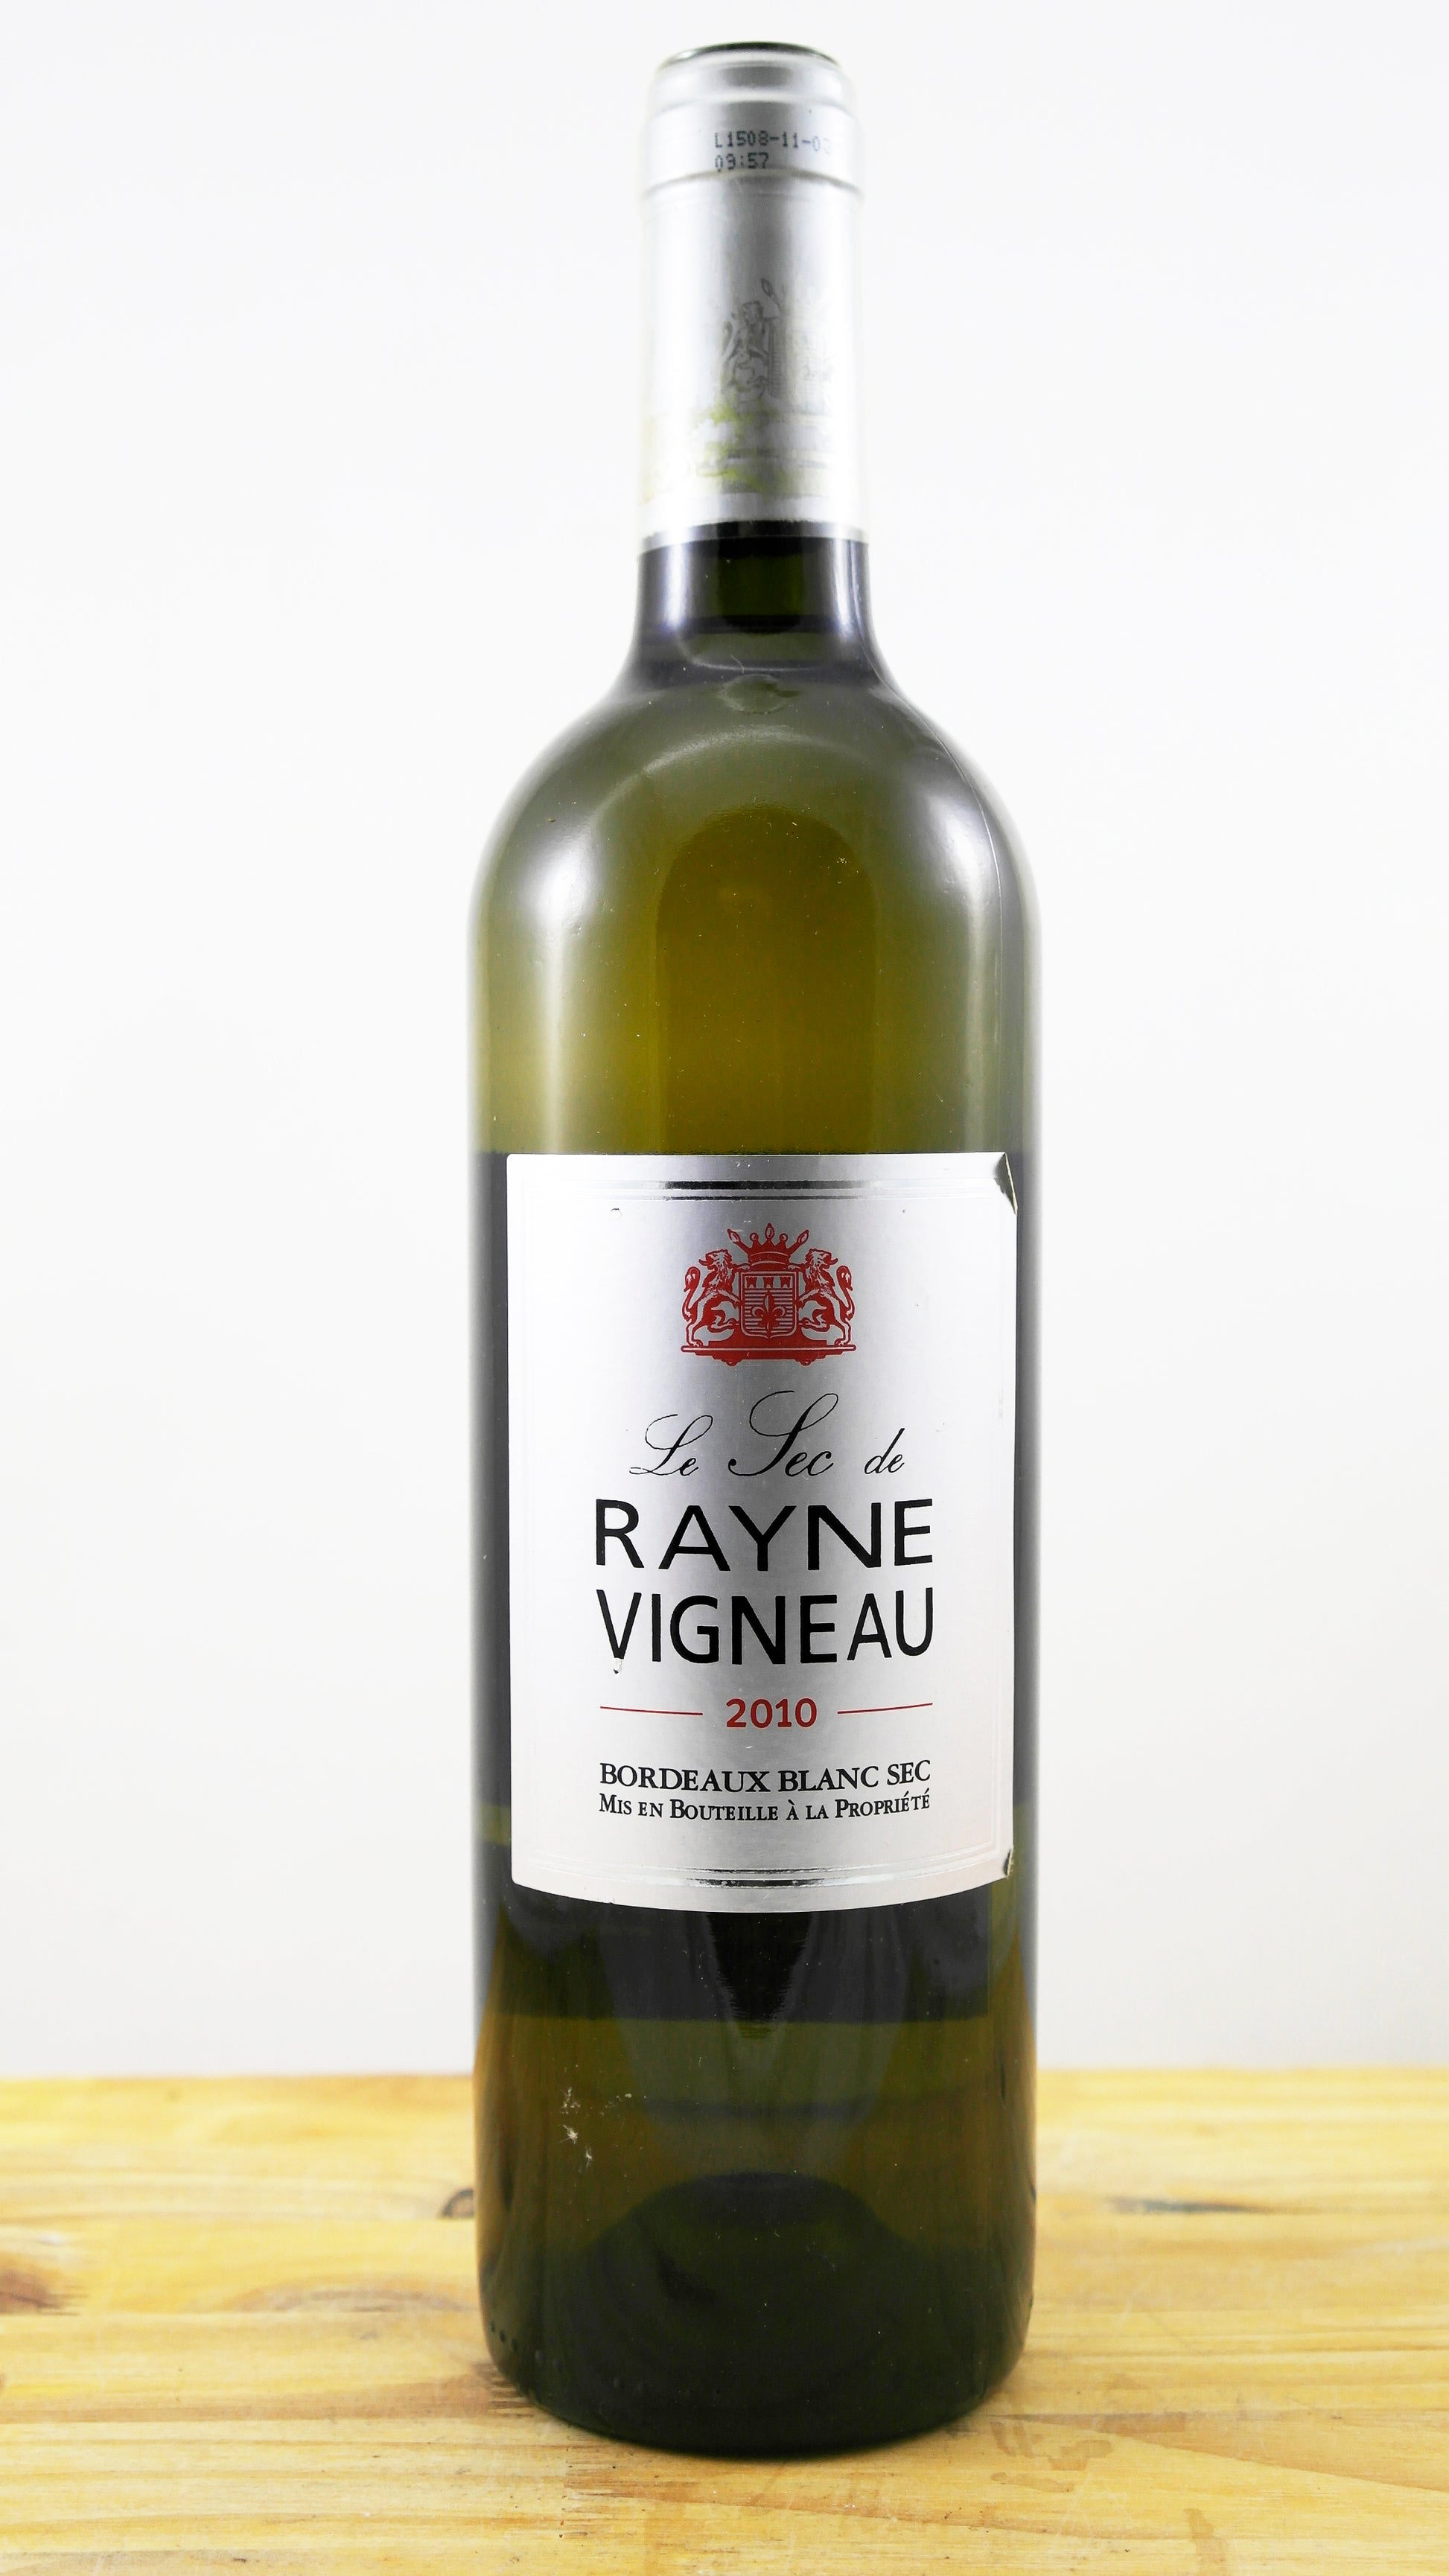 Le Sec de Rayne Vigneau  Vin 2010